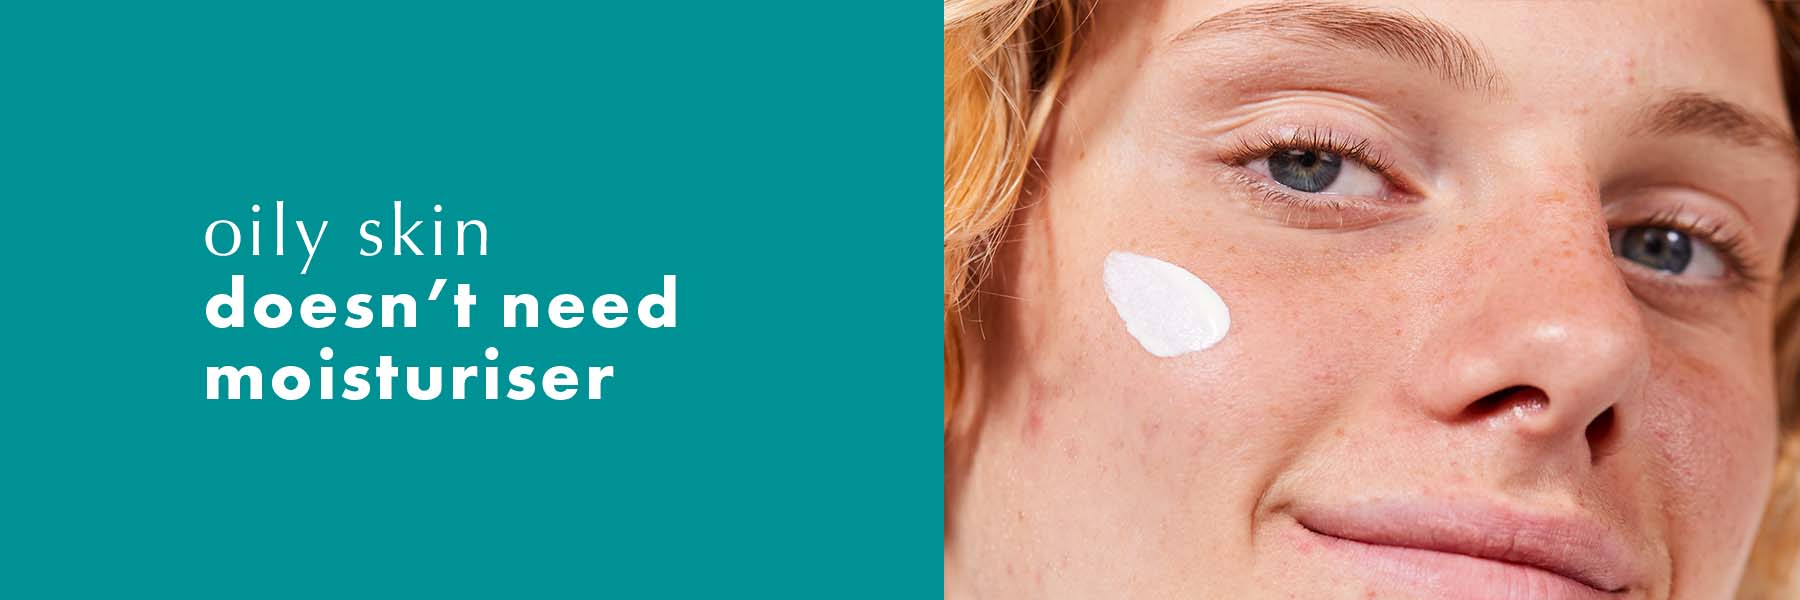 Myth 3: oily skin doesn't need moisturiser